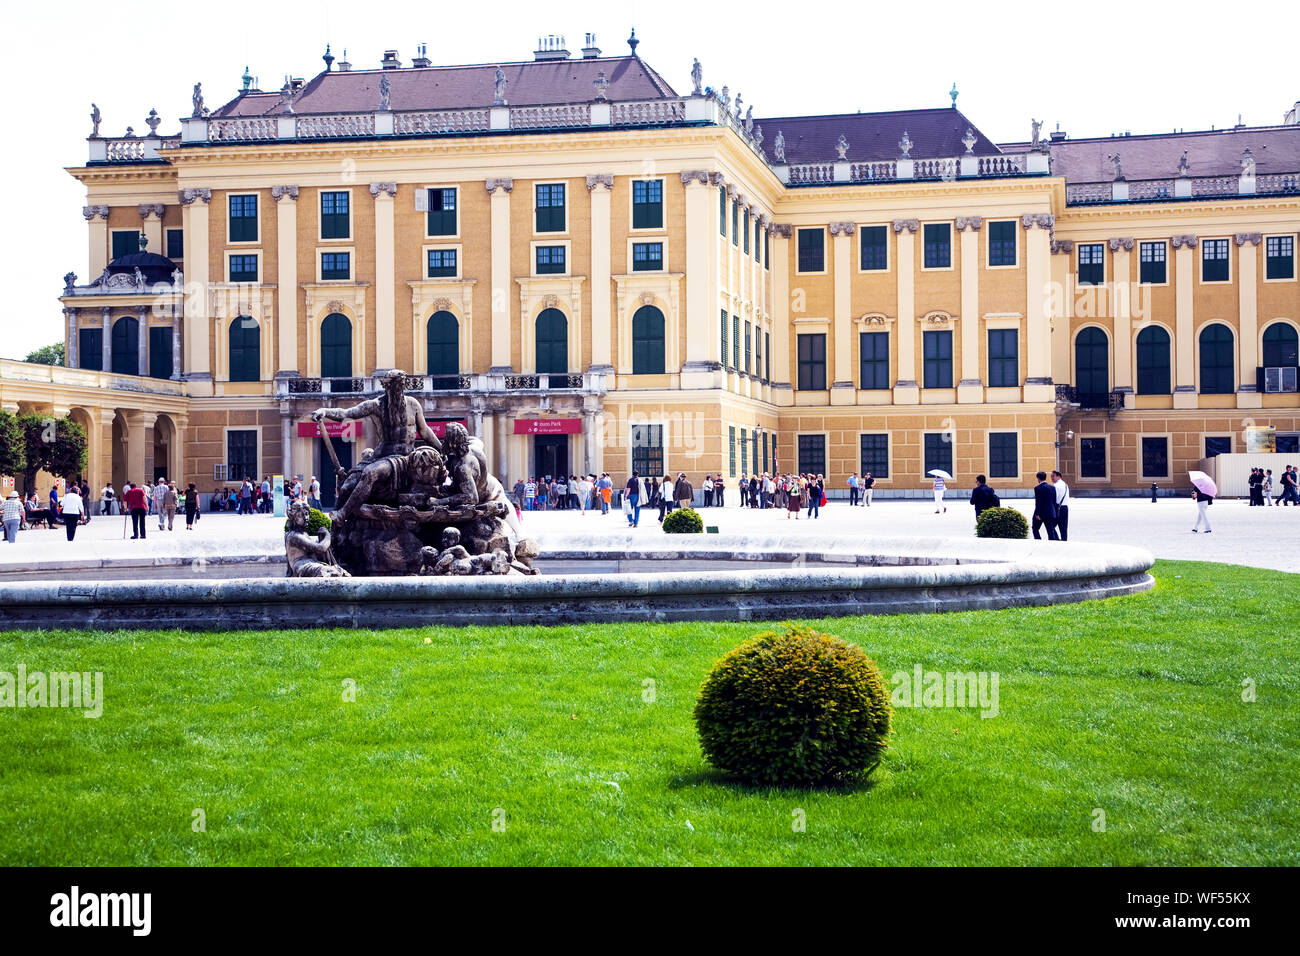 The gardens and entrance of Schloss Schonbrunn. Vienna Austria Stock Photo